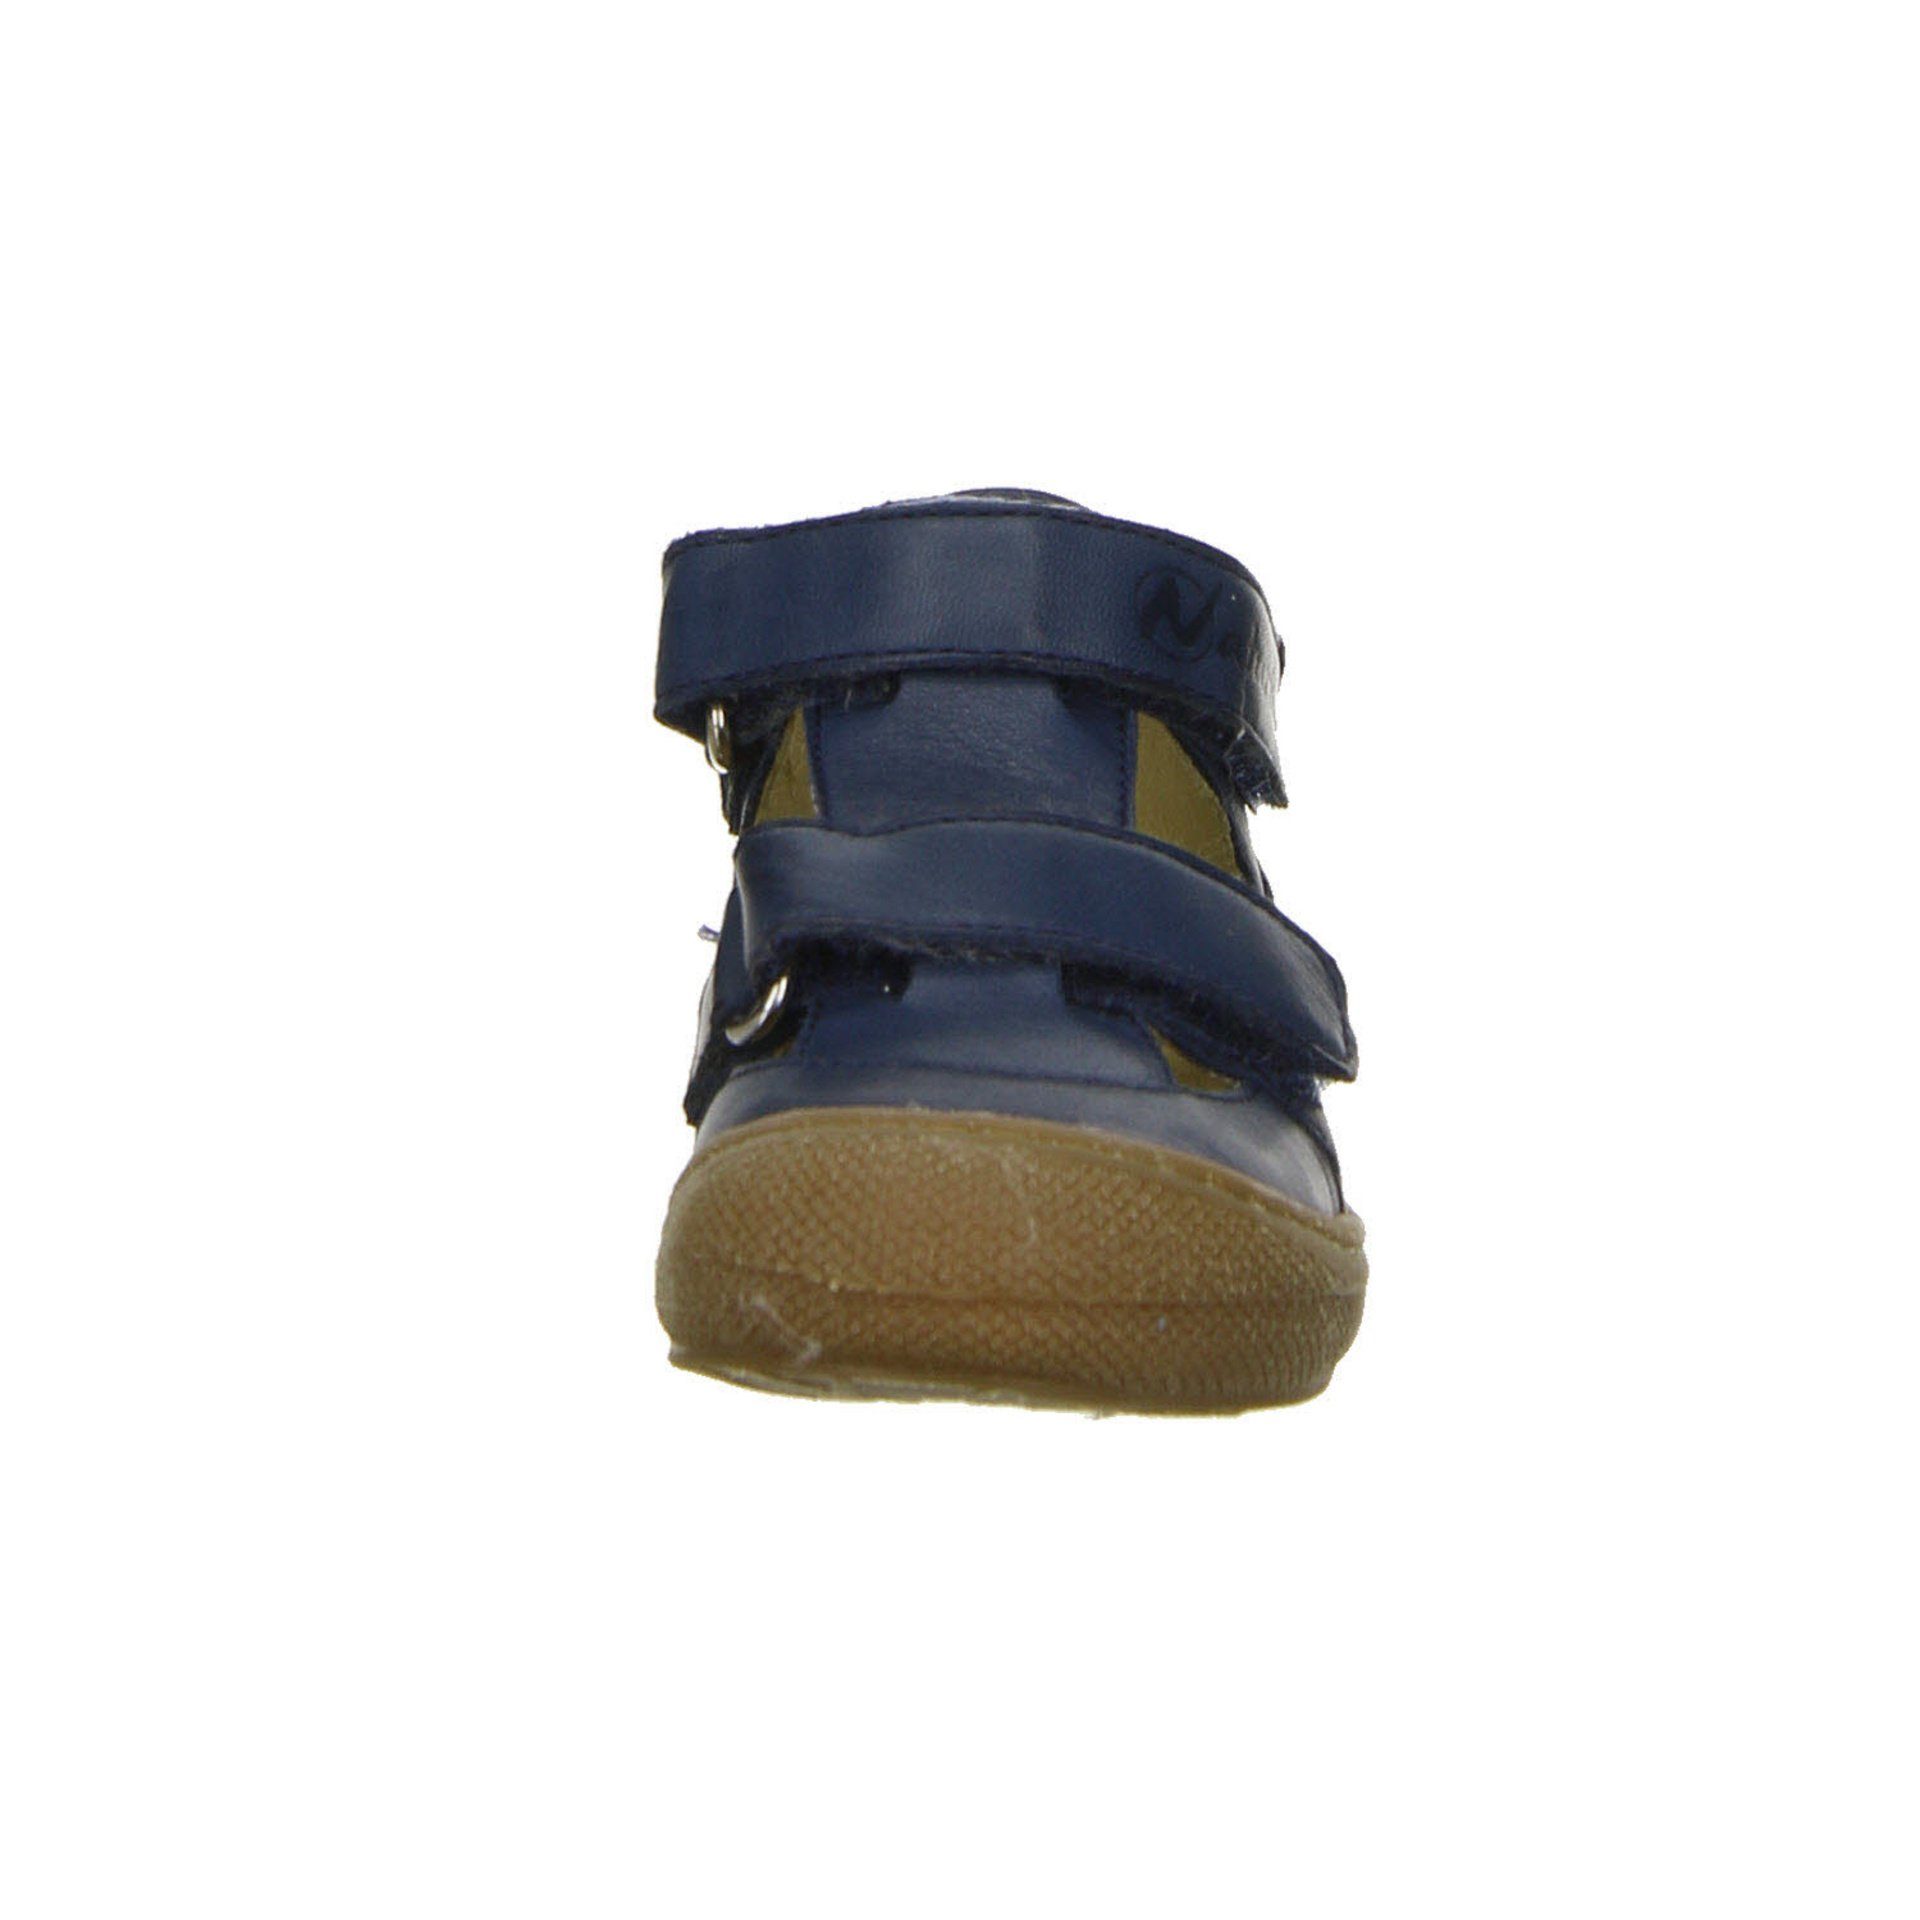 Naturino Jungen Sandalen Lauflernschuh blau dunkel Glattleder Puffy Schuhe Minilette